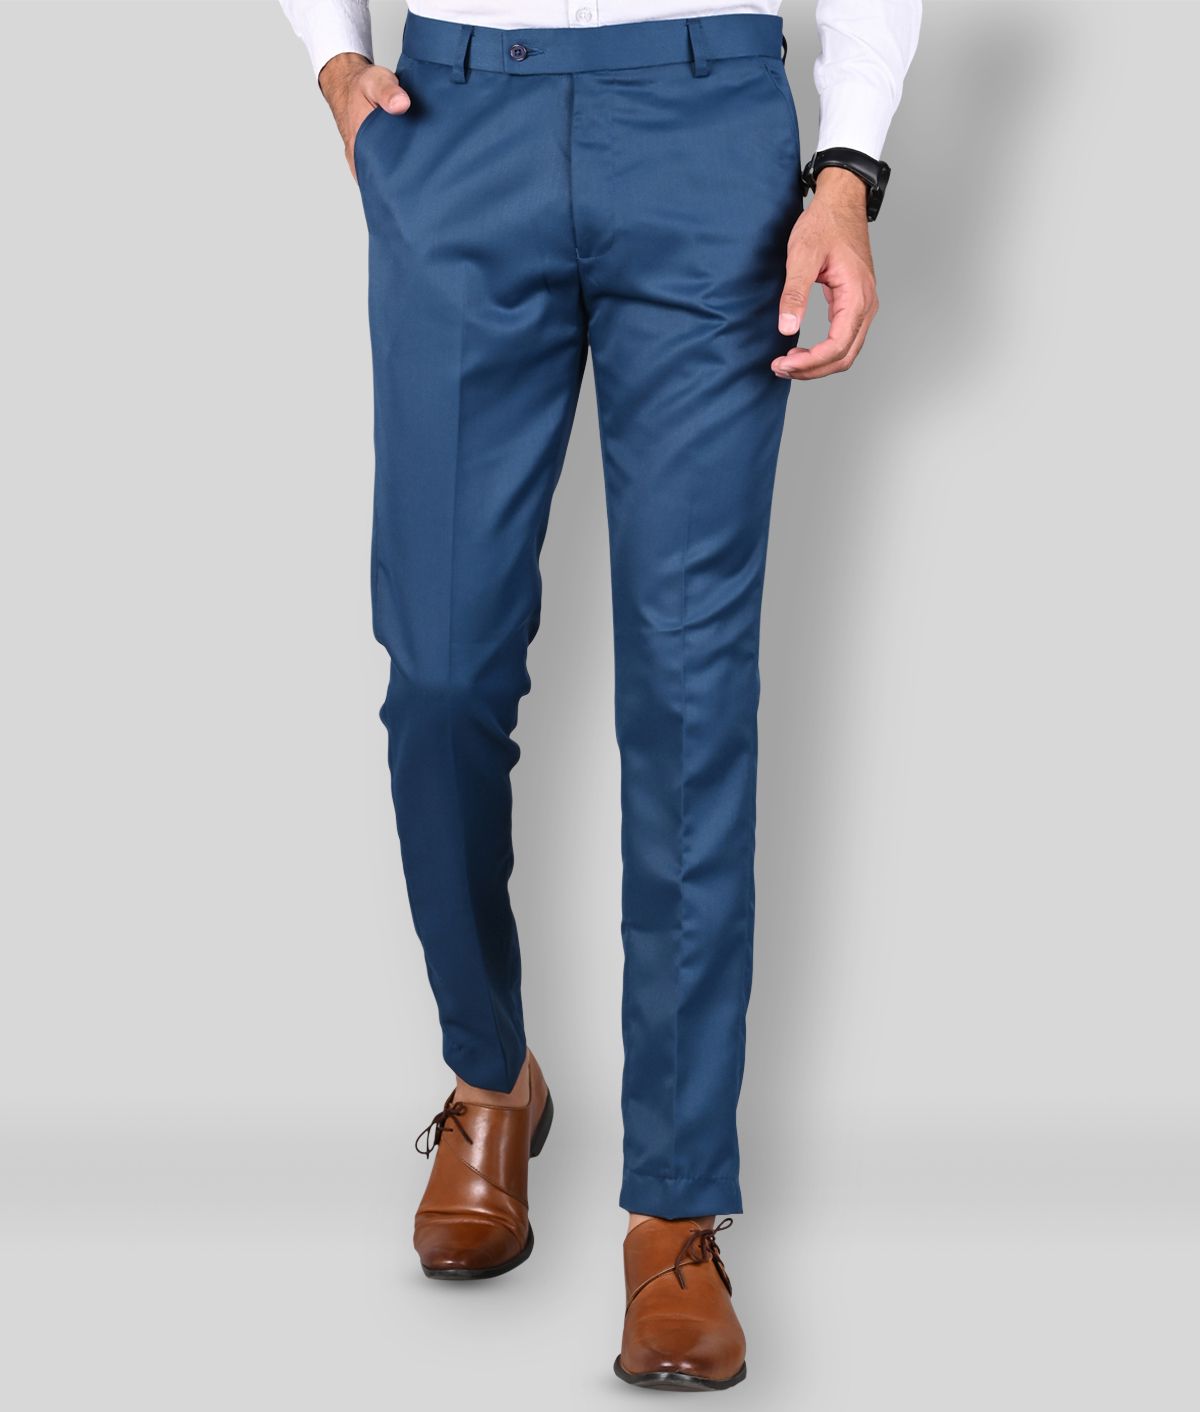     			MANCREW - Blue Polycotton Slim - Fit Men's Formal Pants ( Pack of 1 )